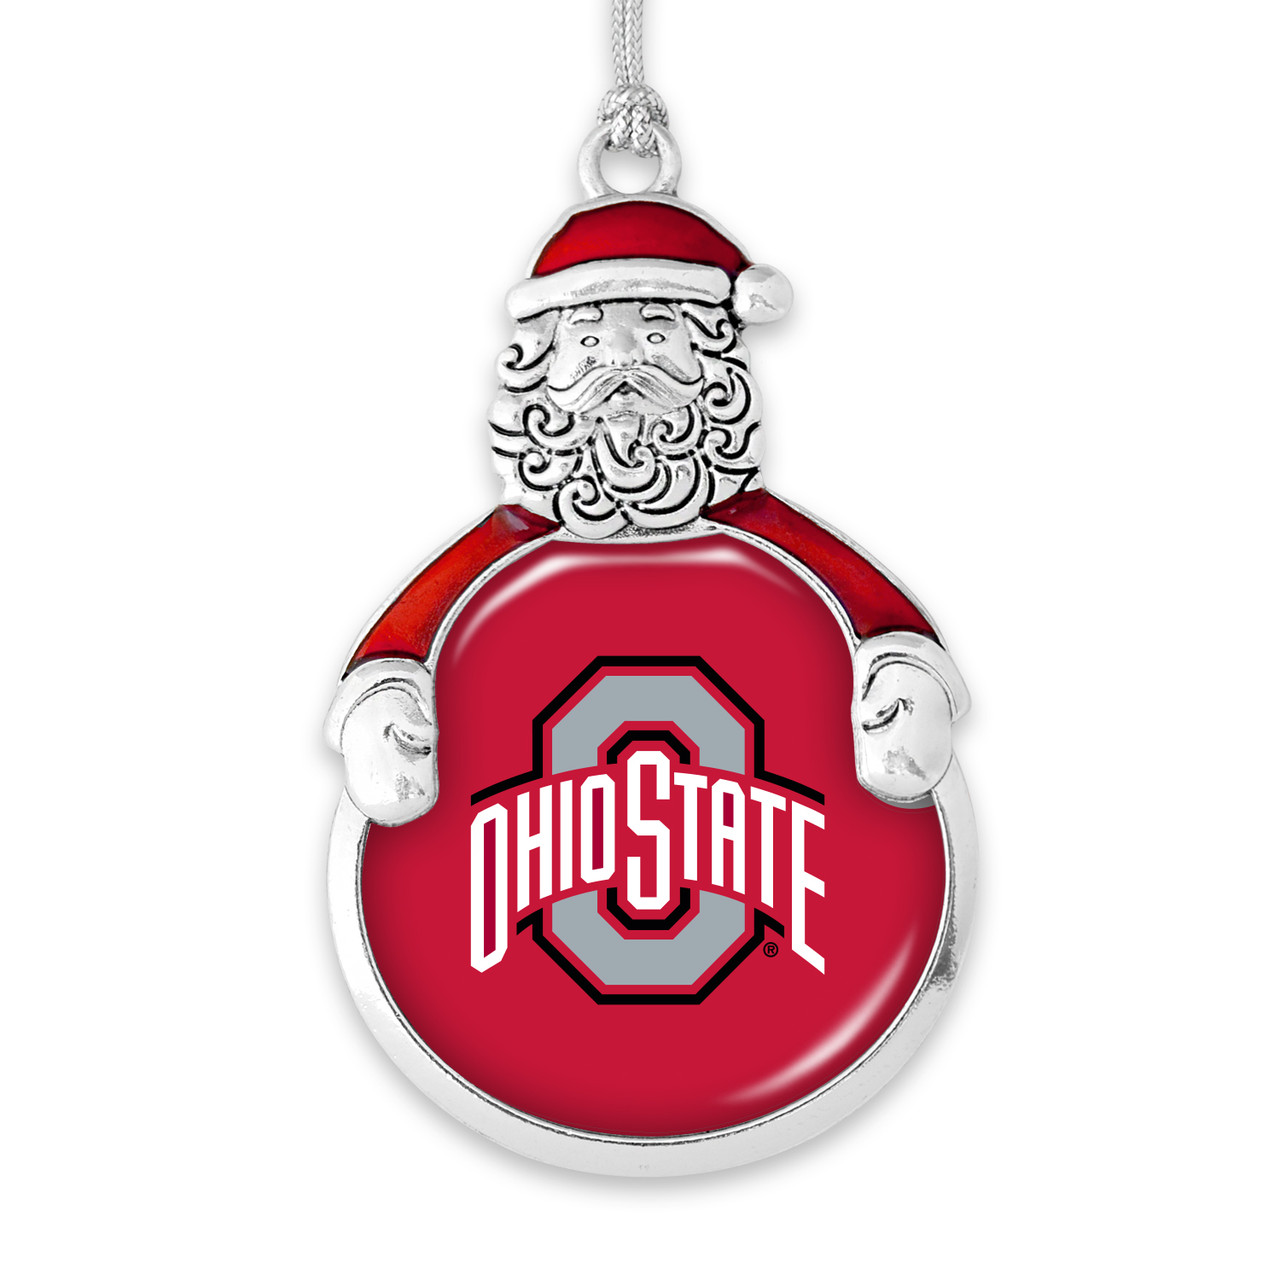 Ohio State Buckeyes Christmas Ornament- Santa with Team Logo